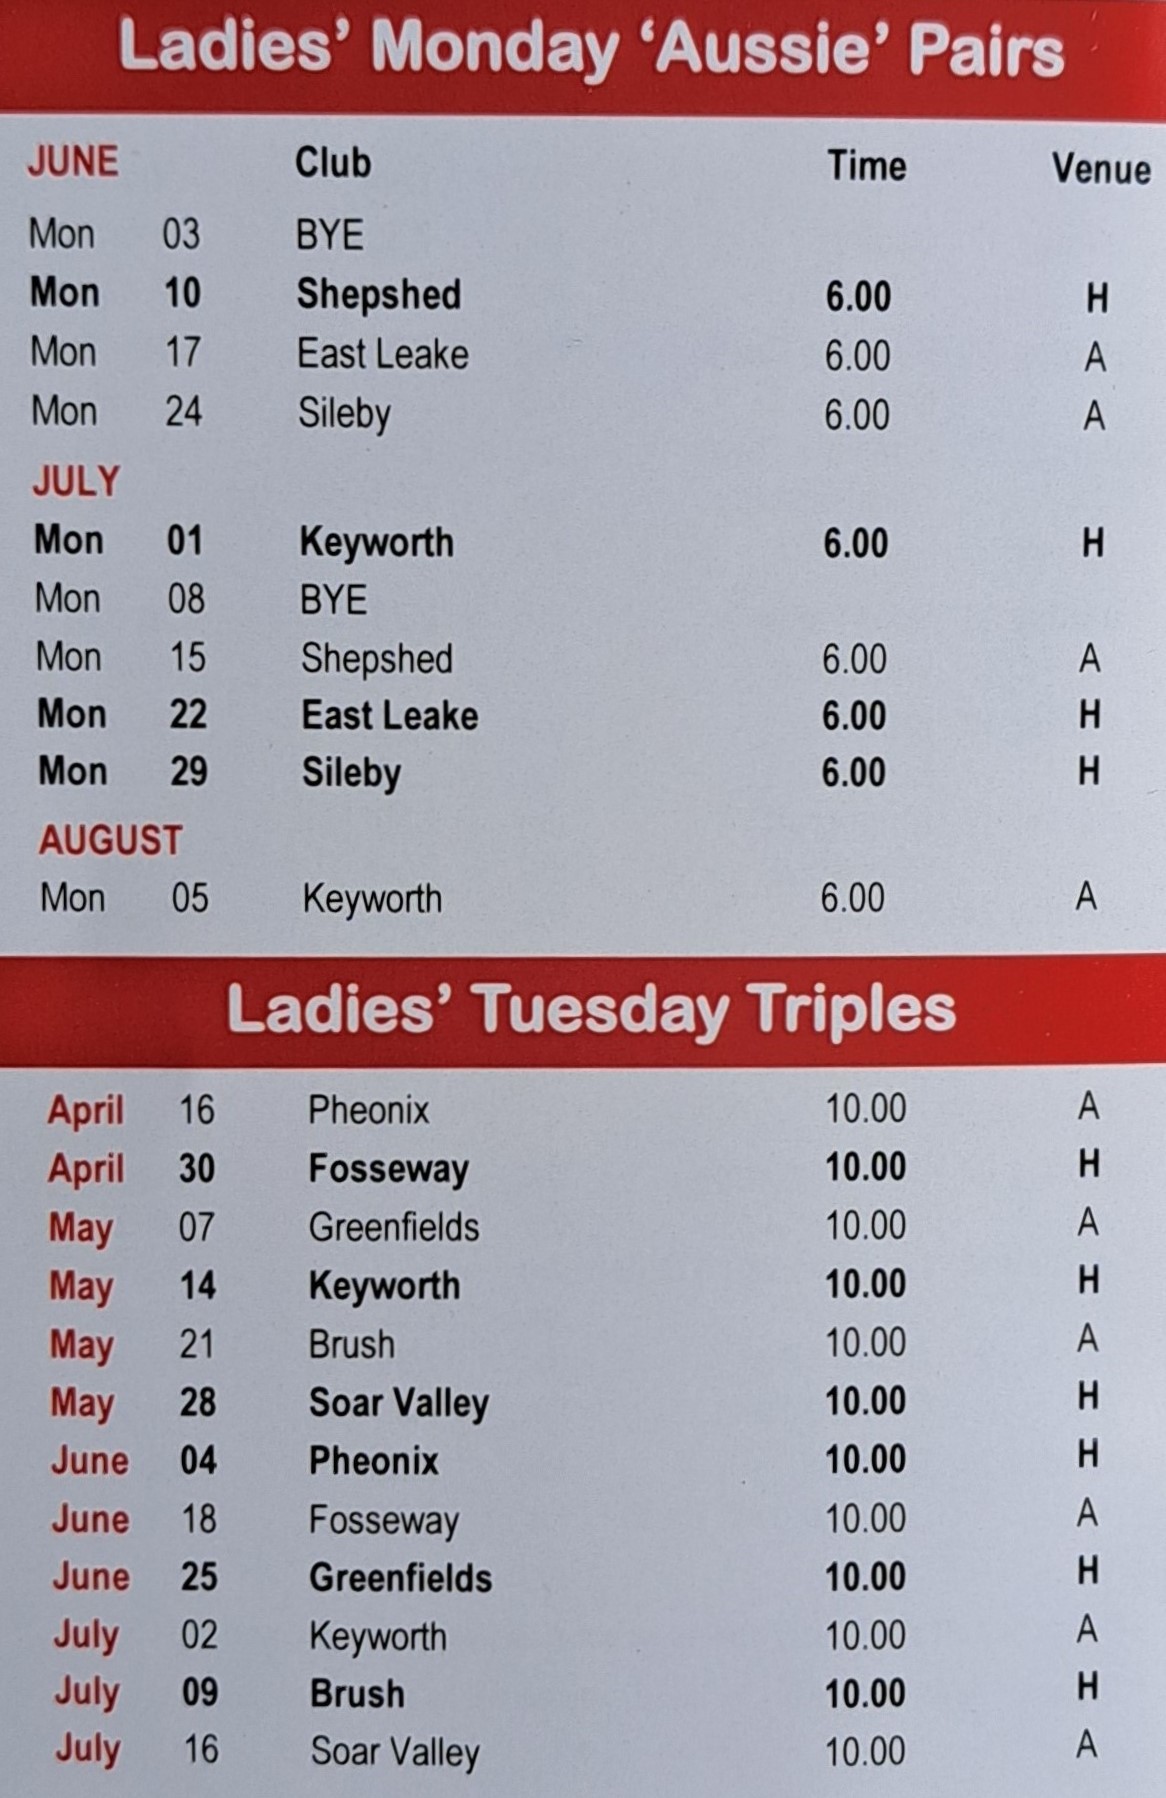 Birstall Bowling Club Ladies Fixtures